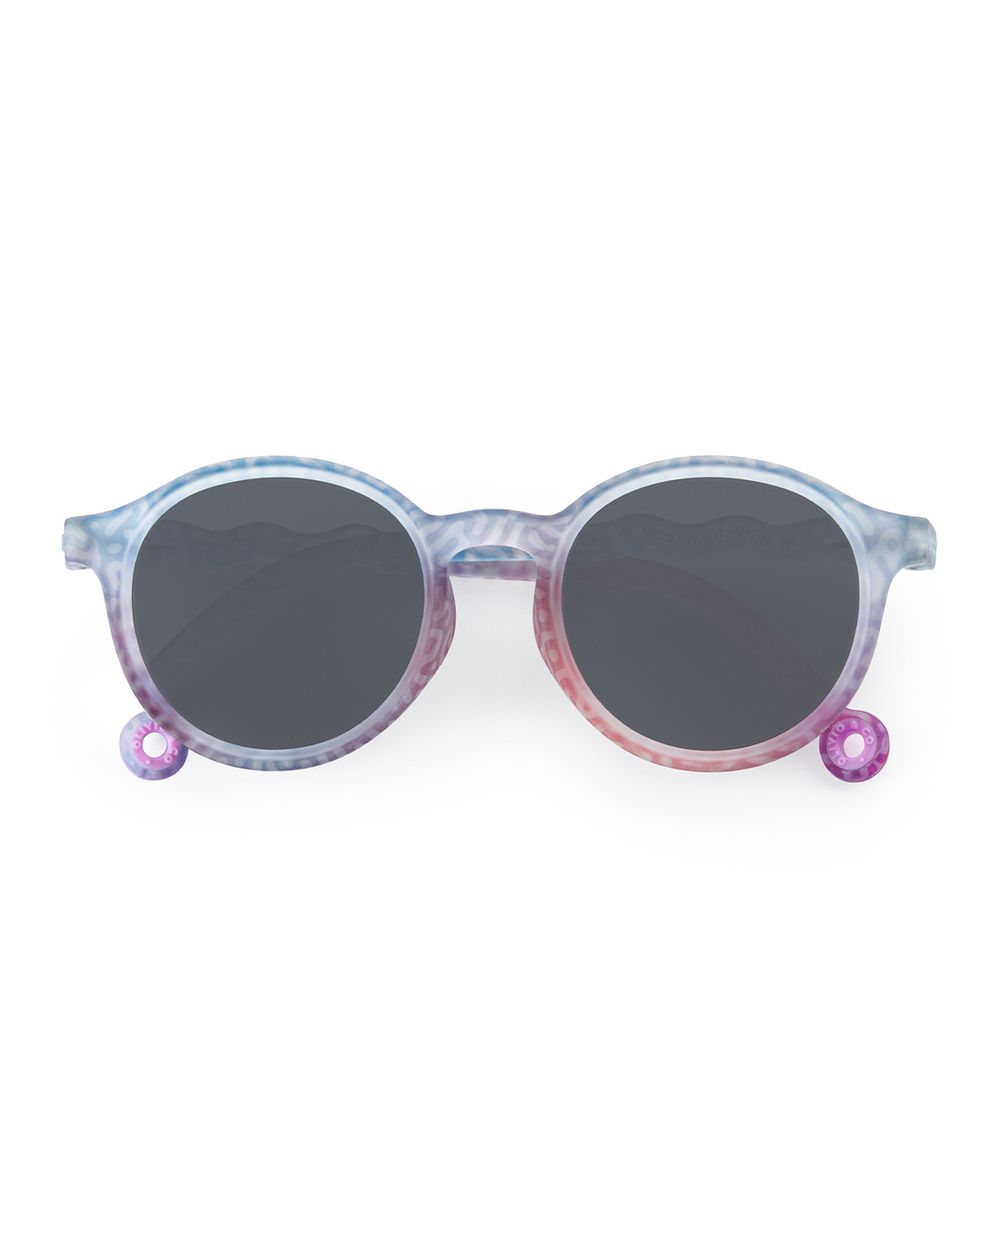 Kids Oval Sunglasses Coral Fantasy